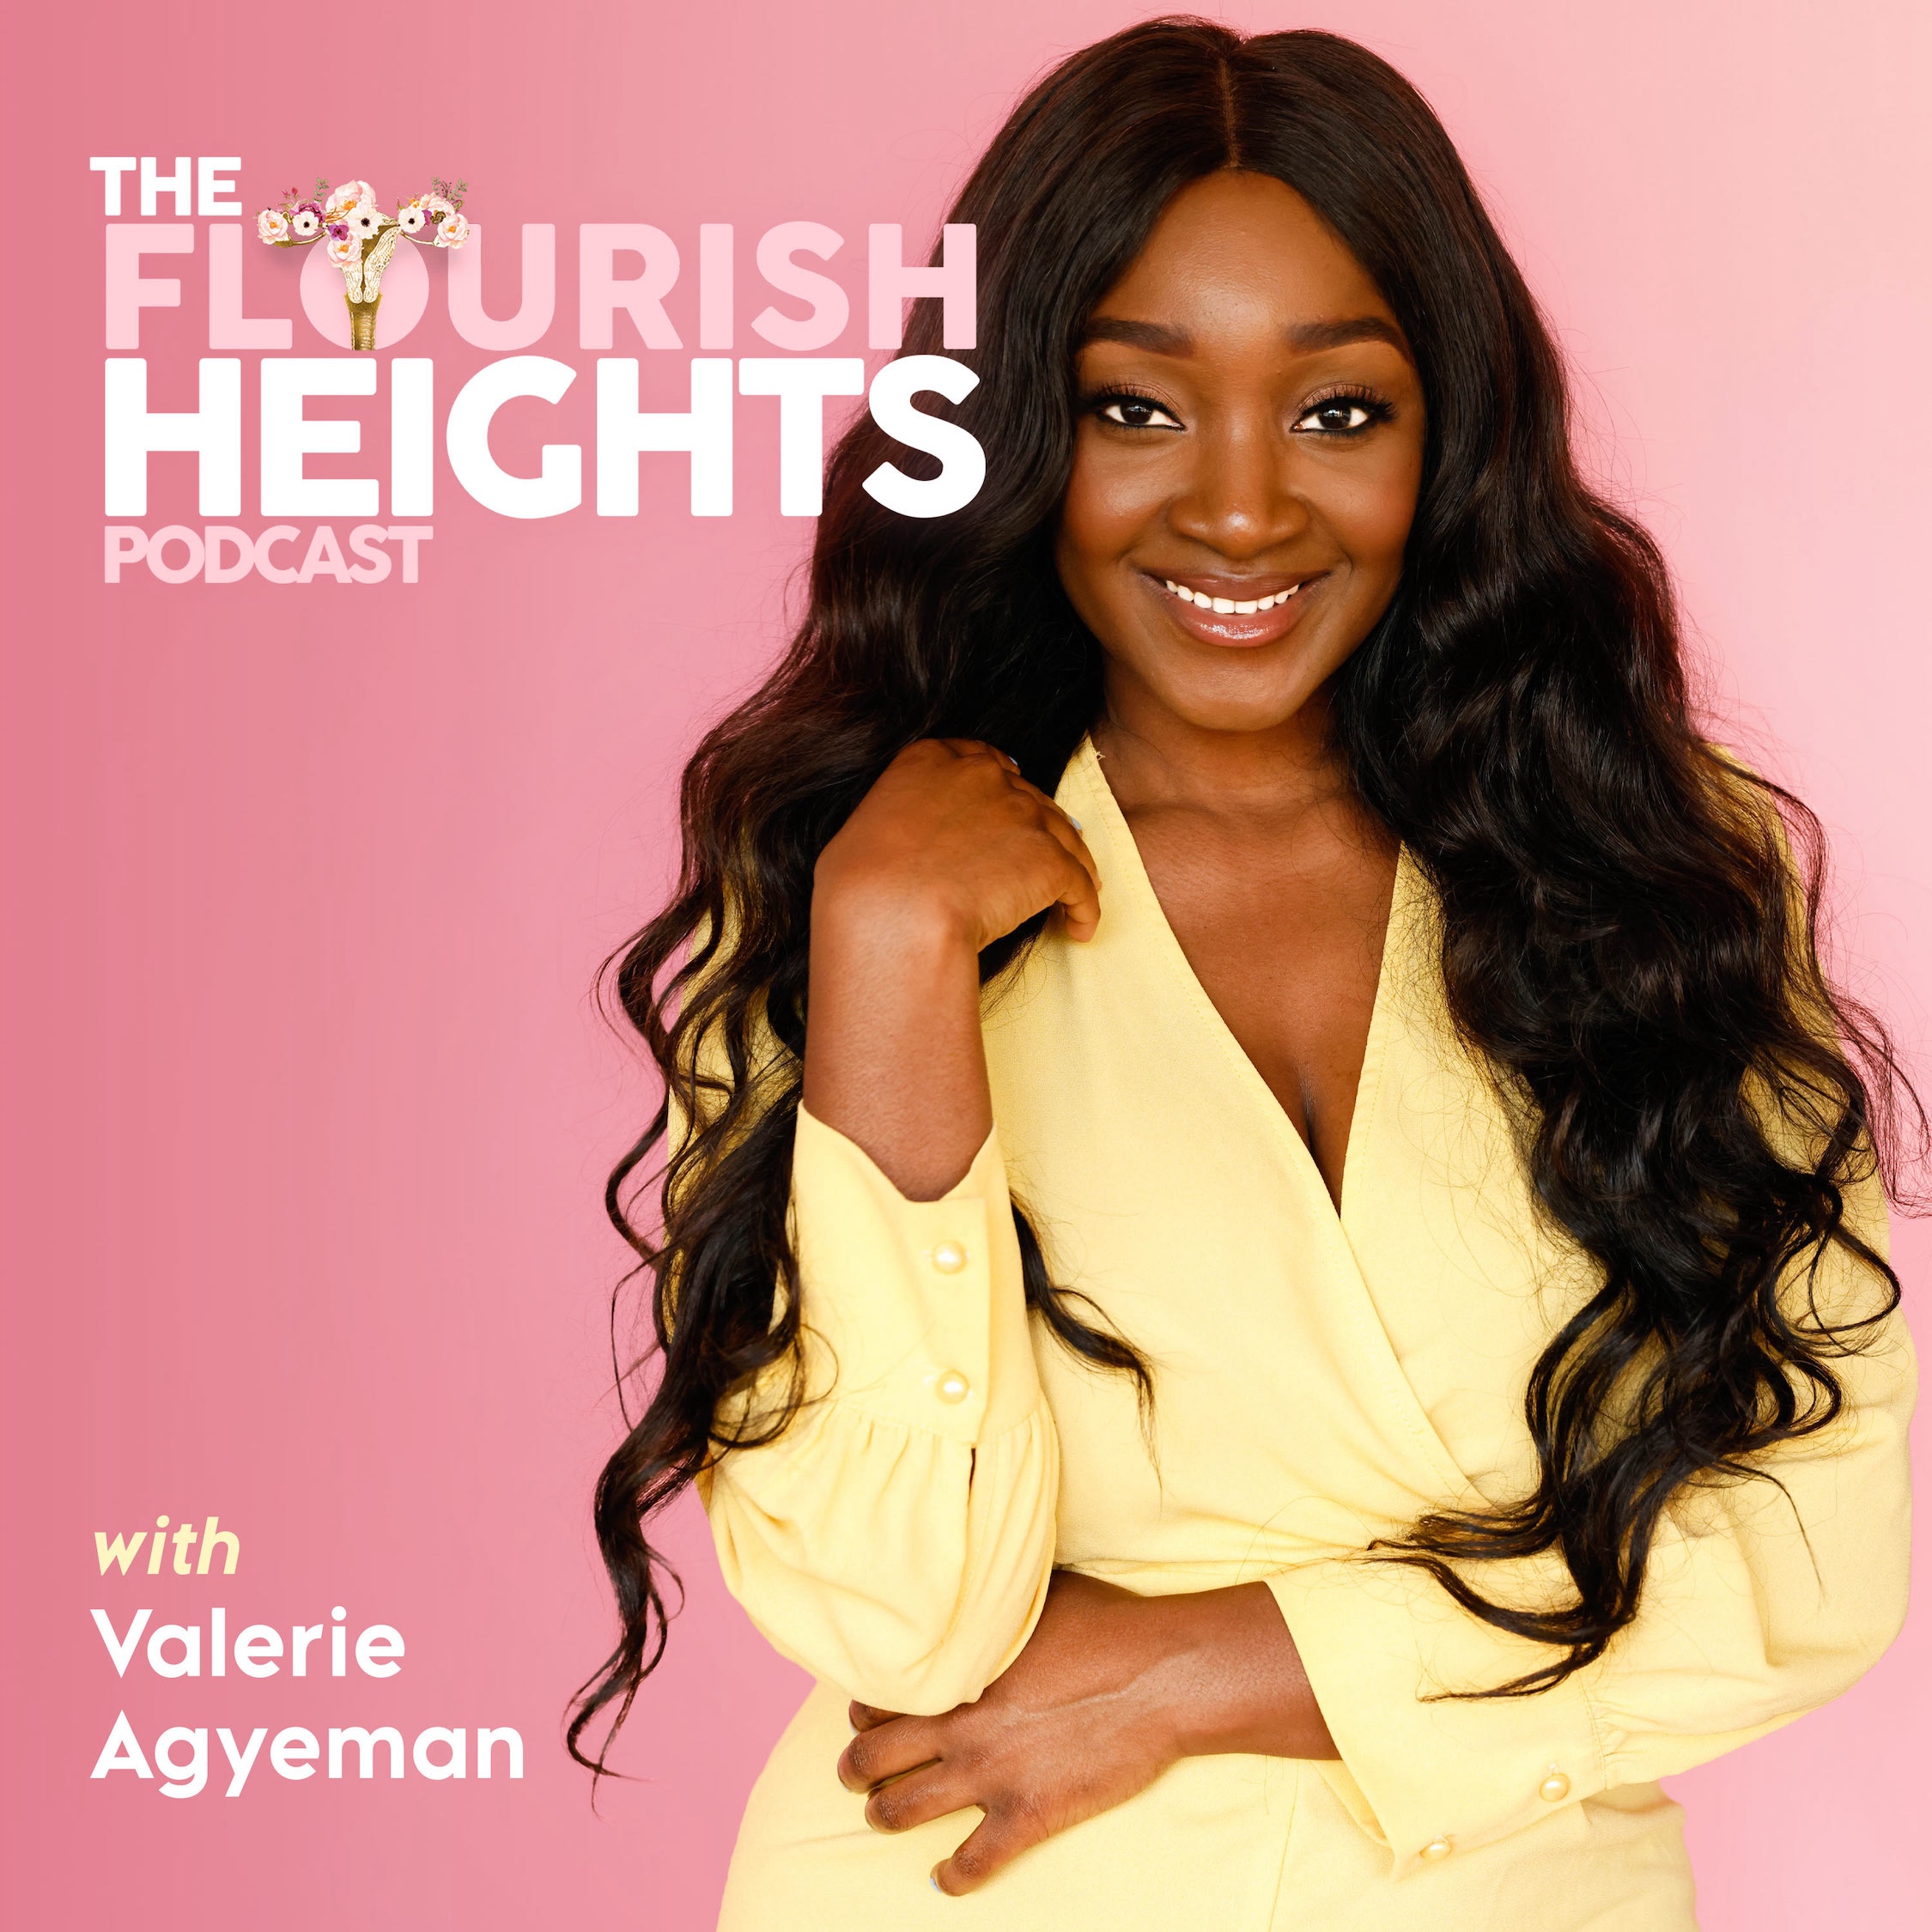 The Flourish Heights Podcast